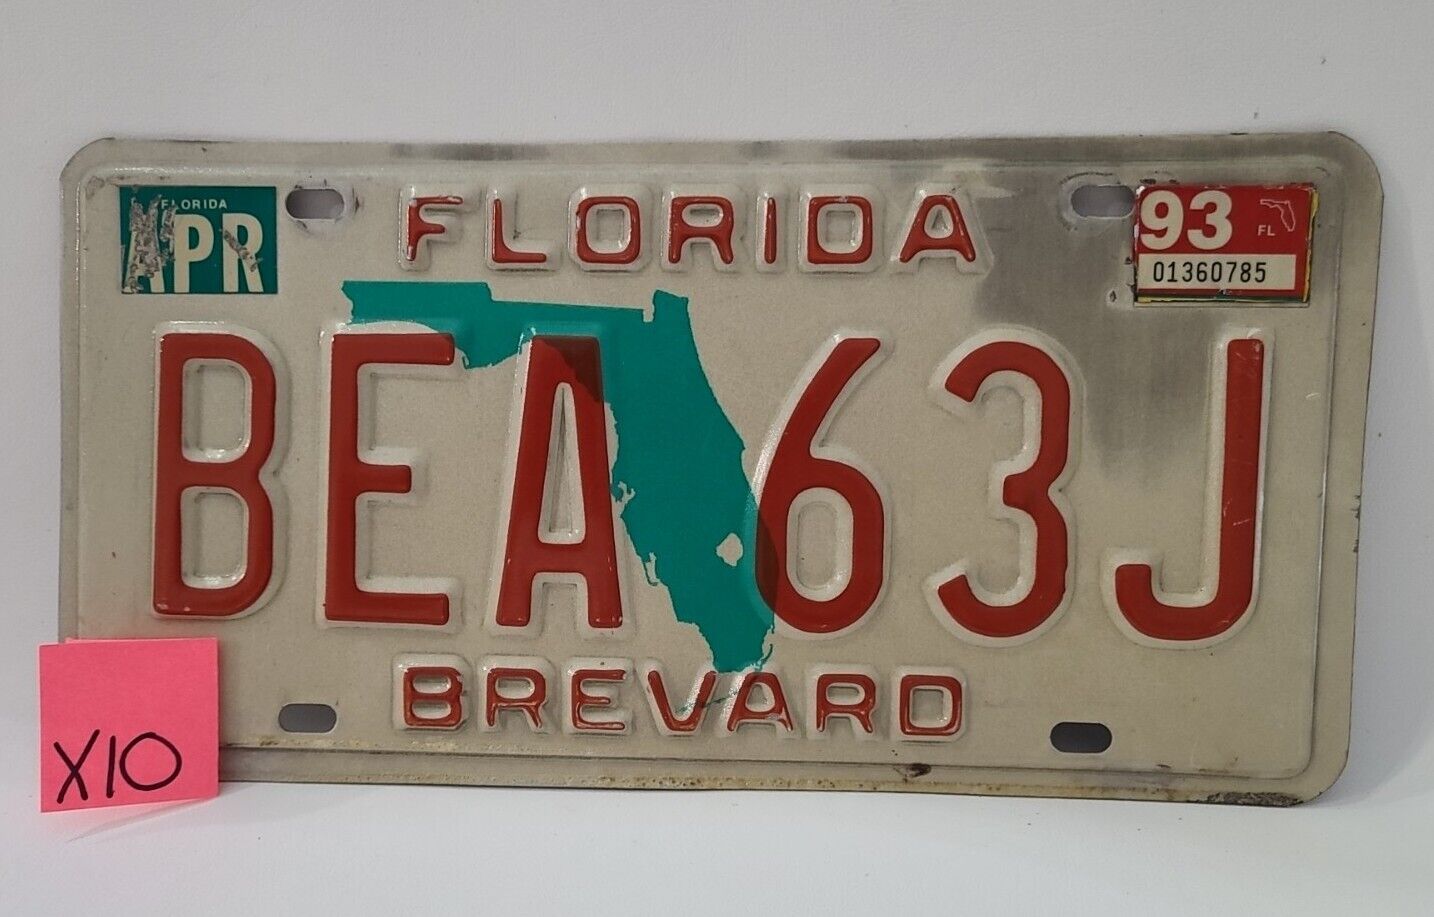 1993 Florida License Plate BEA 63J Brevard Vintage Metal Old Damage Read ⬇ X10